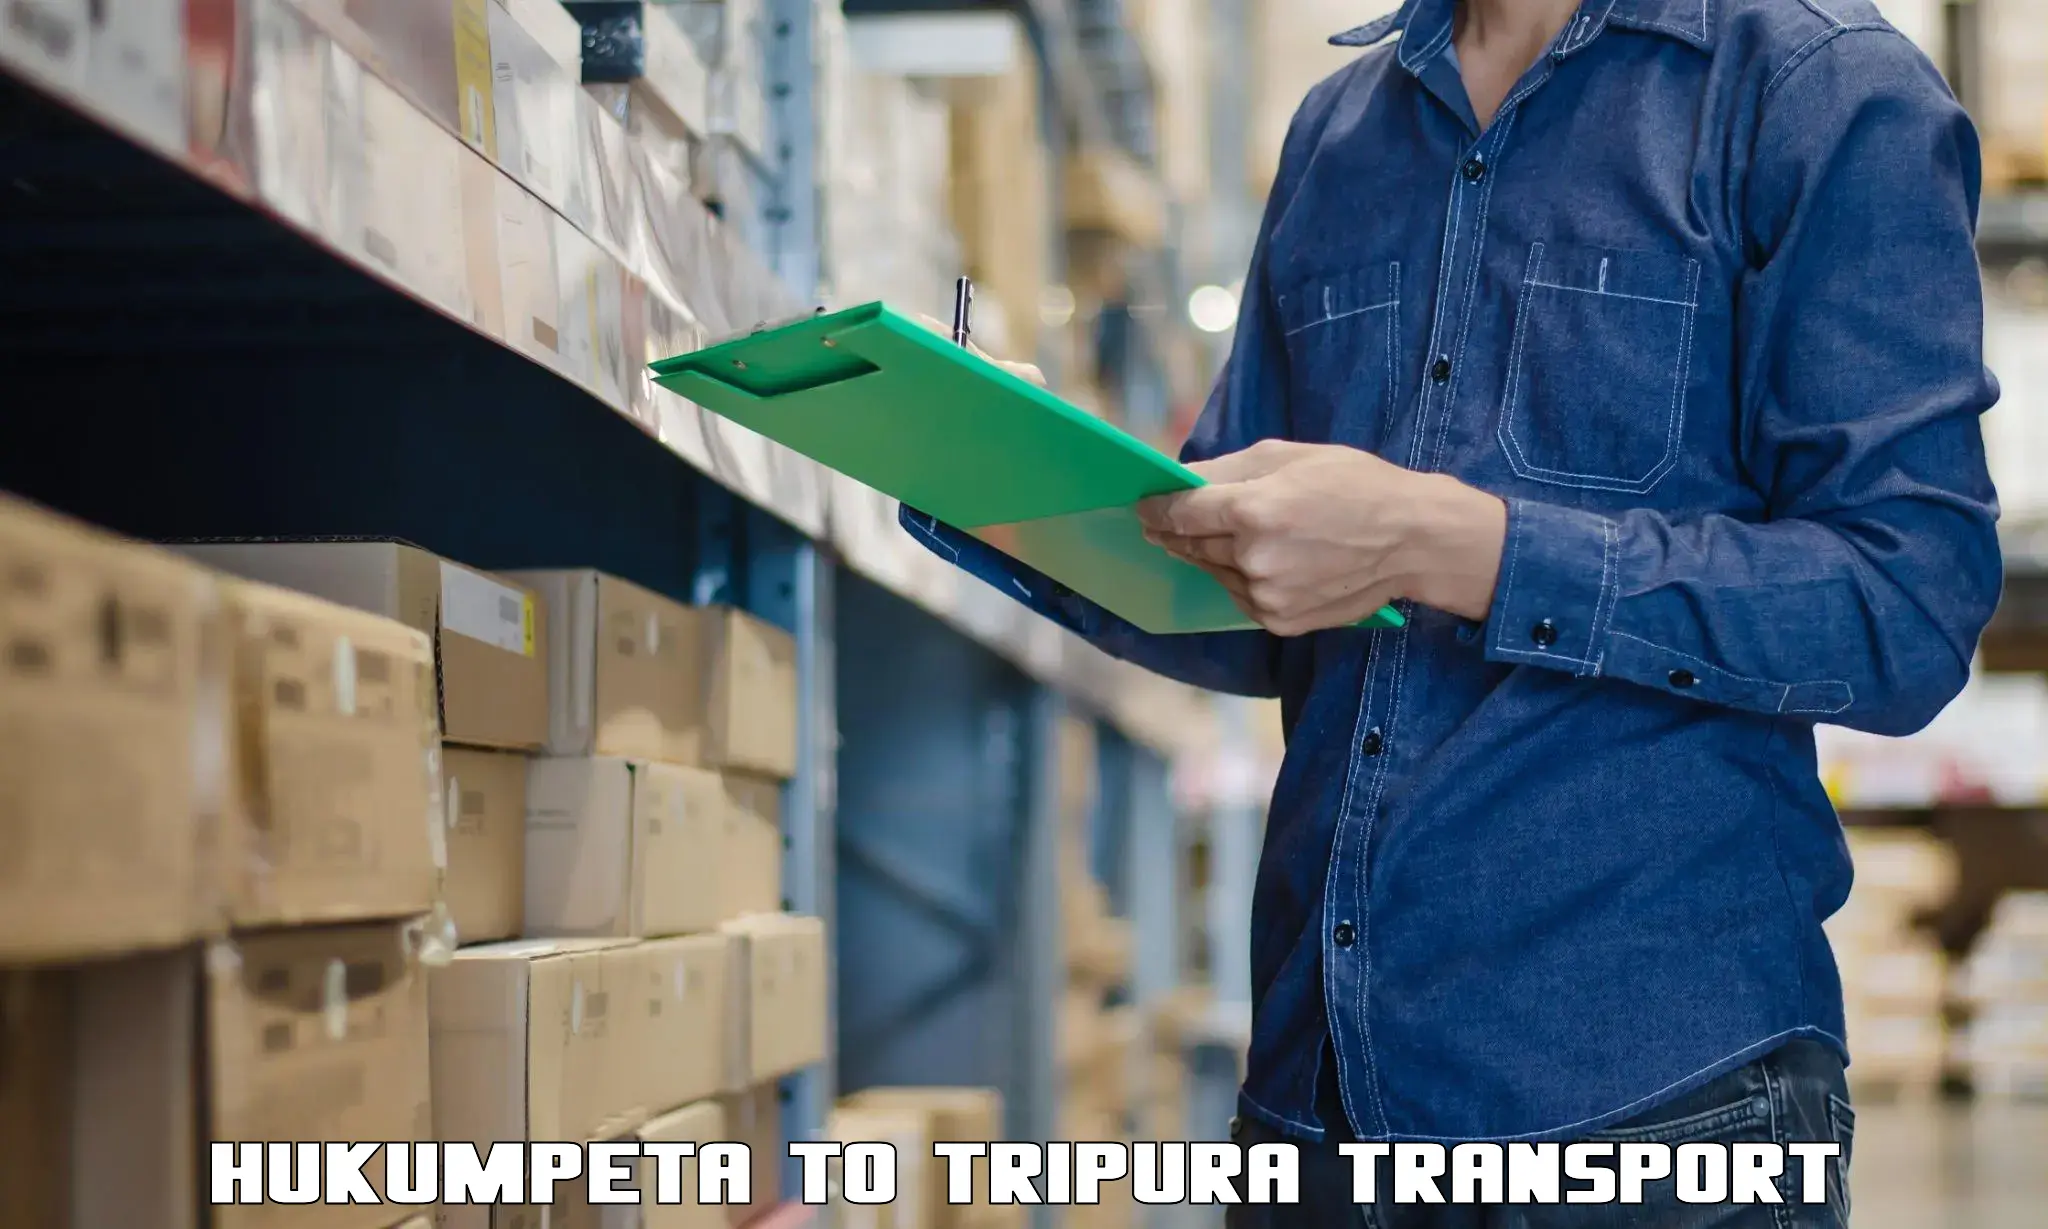 Pick up transport service Hukumpeta to North Tripura